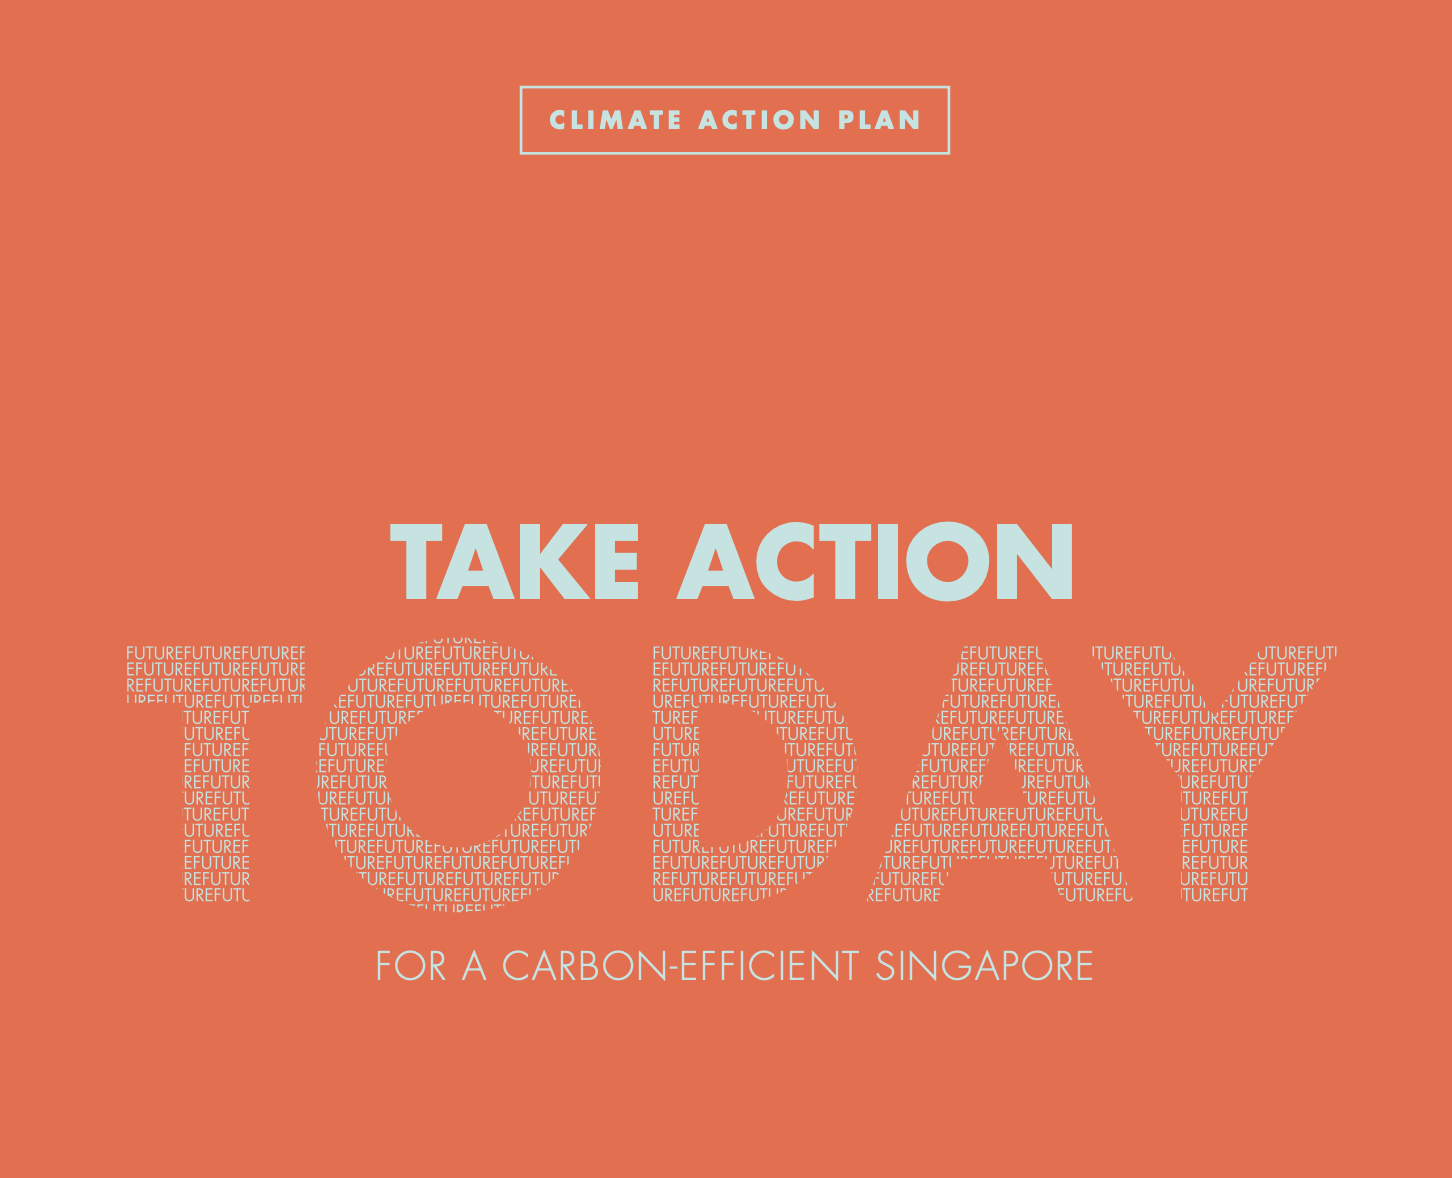 Climate Action Plan (Mitigation)